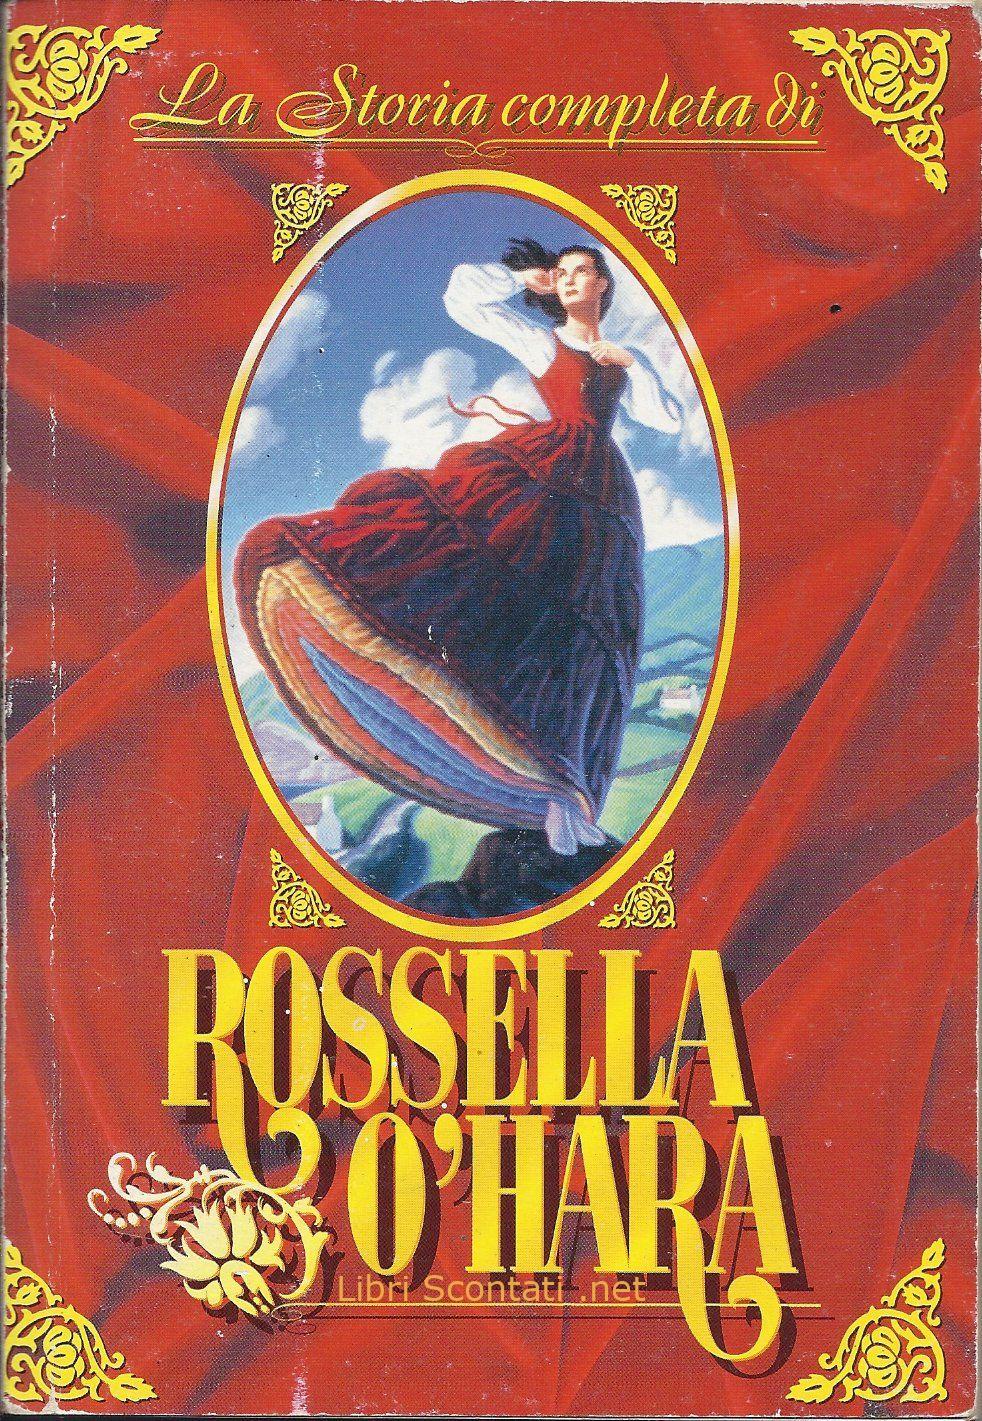 Copertina di Rossella o'hara 